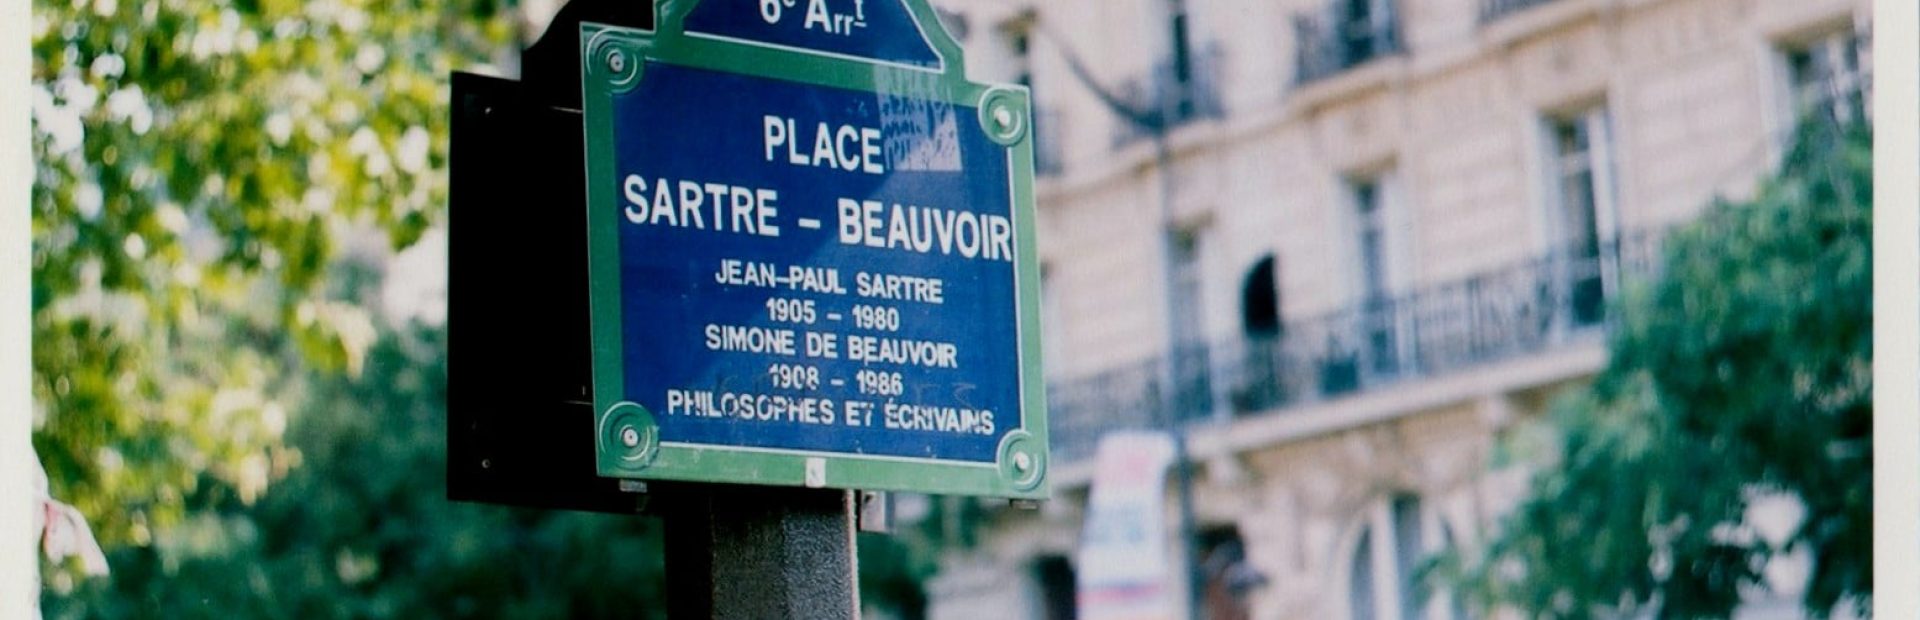 Paris square named after Sartre